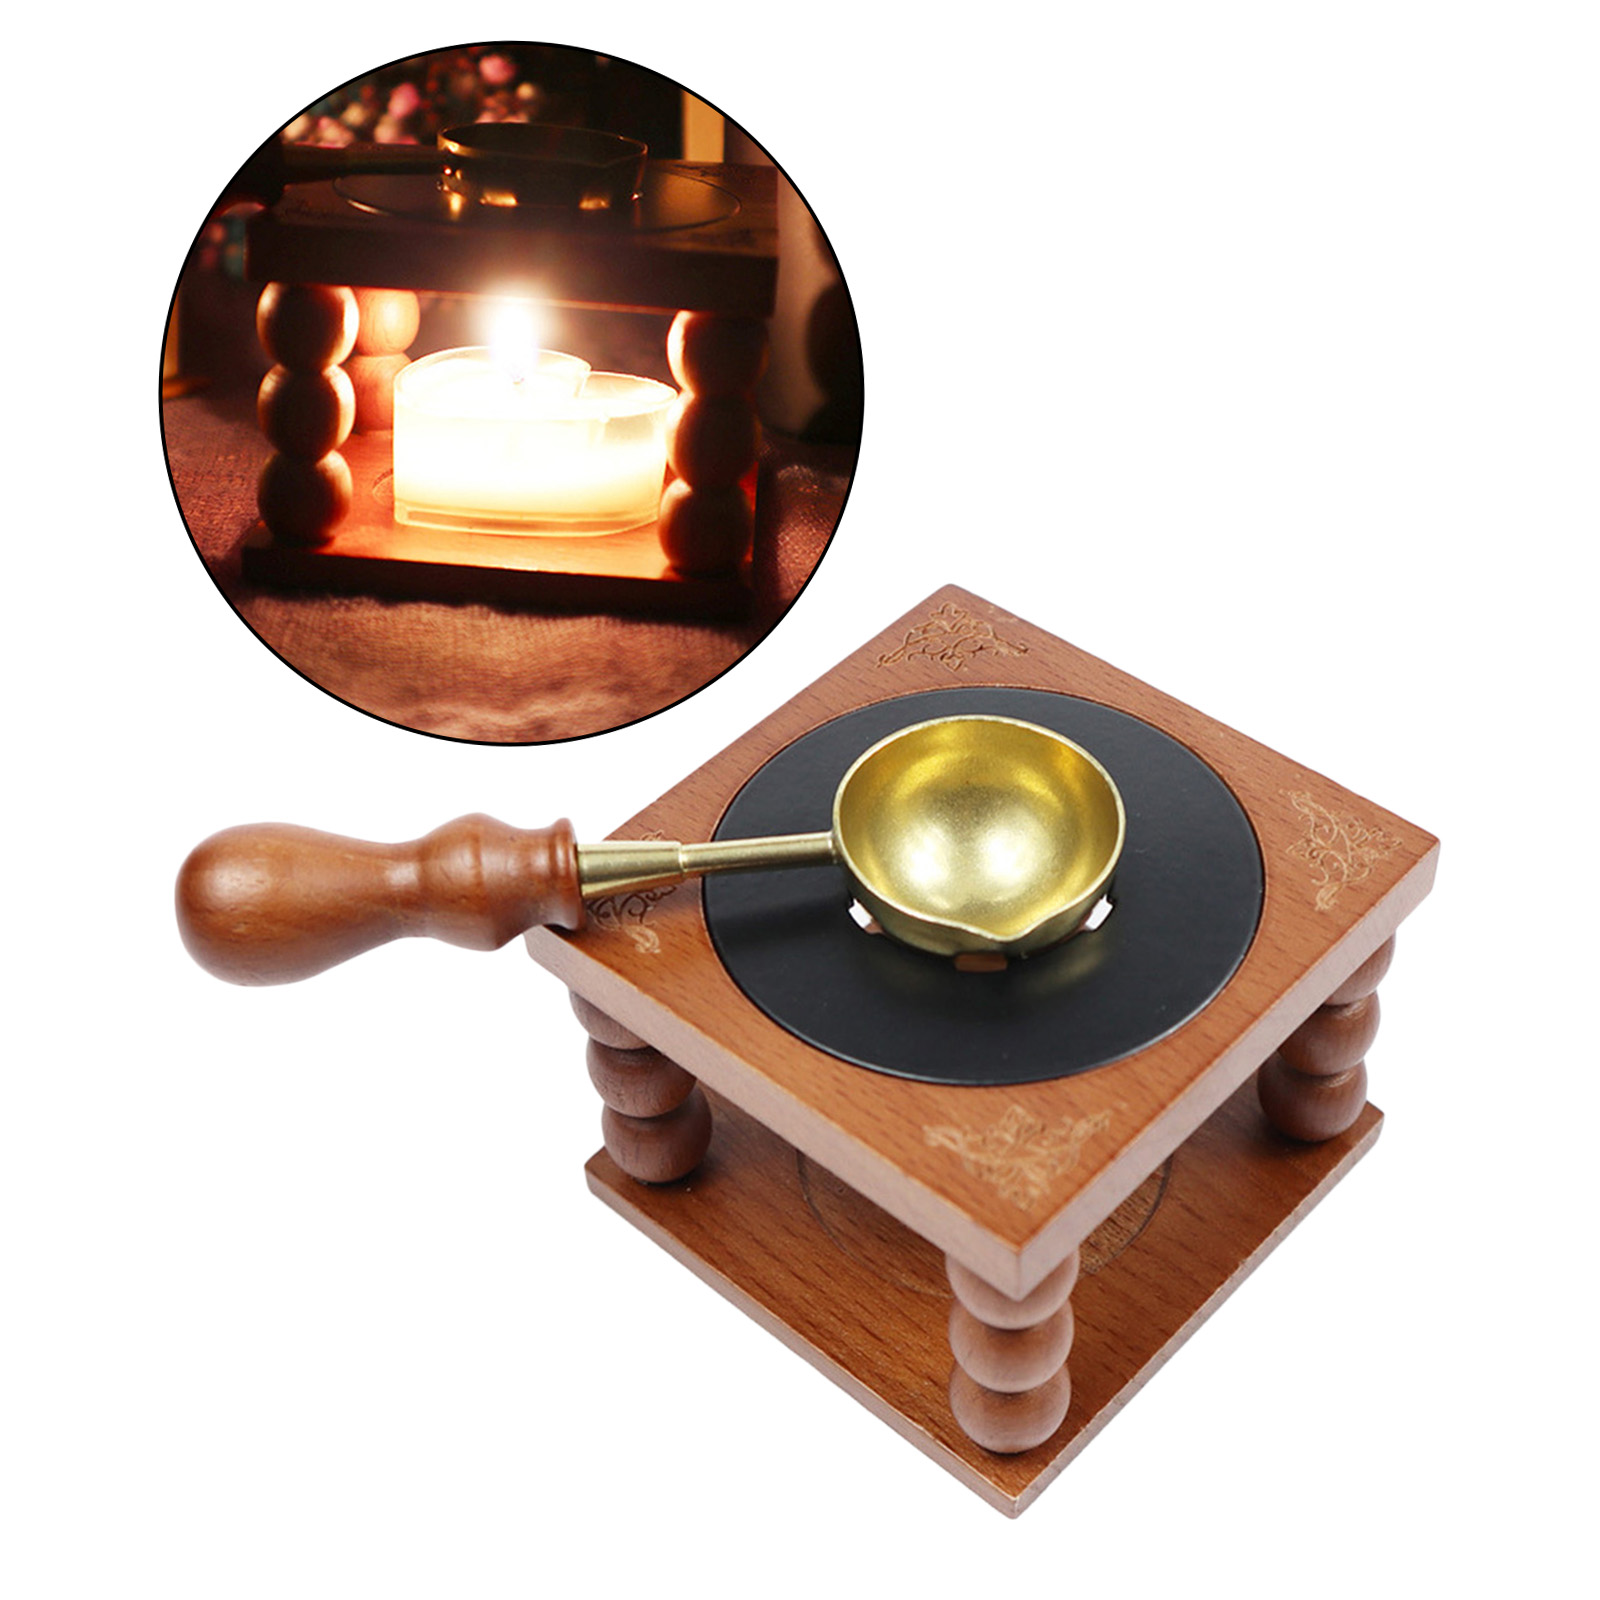 Wax Seal Furnace Set Wooden Wax Seal Warmer With Brass Spoon Melting Wax